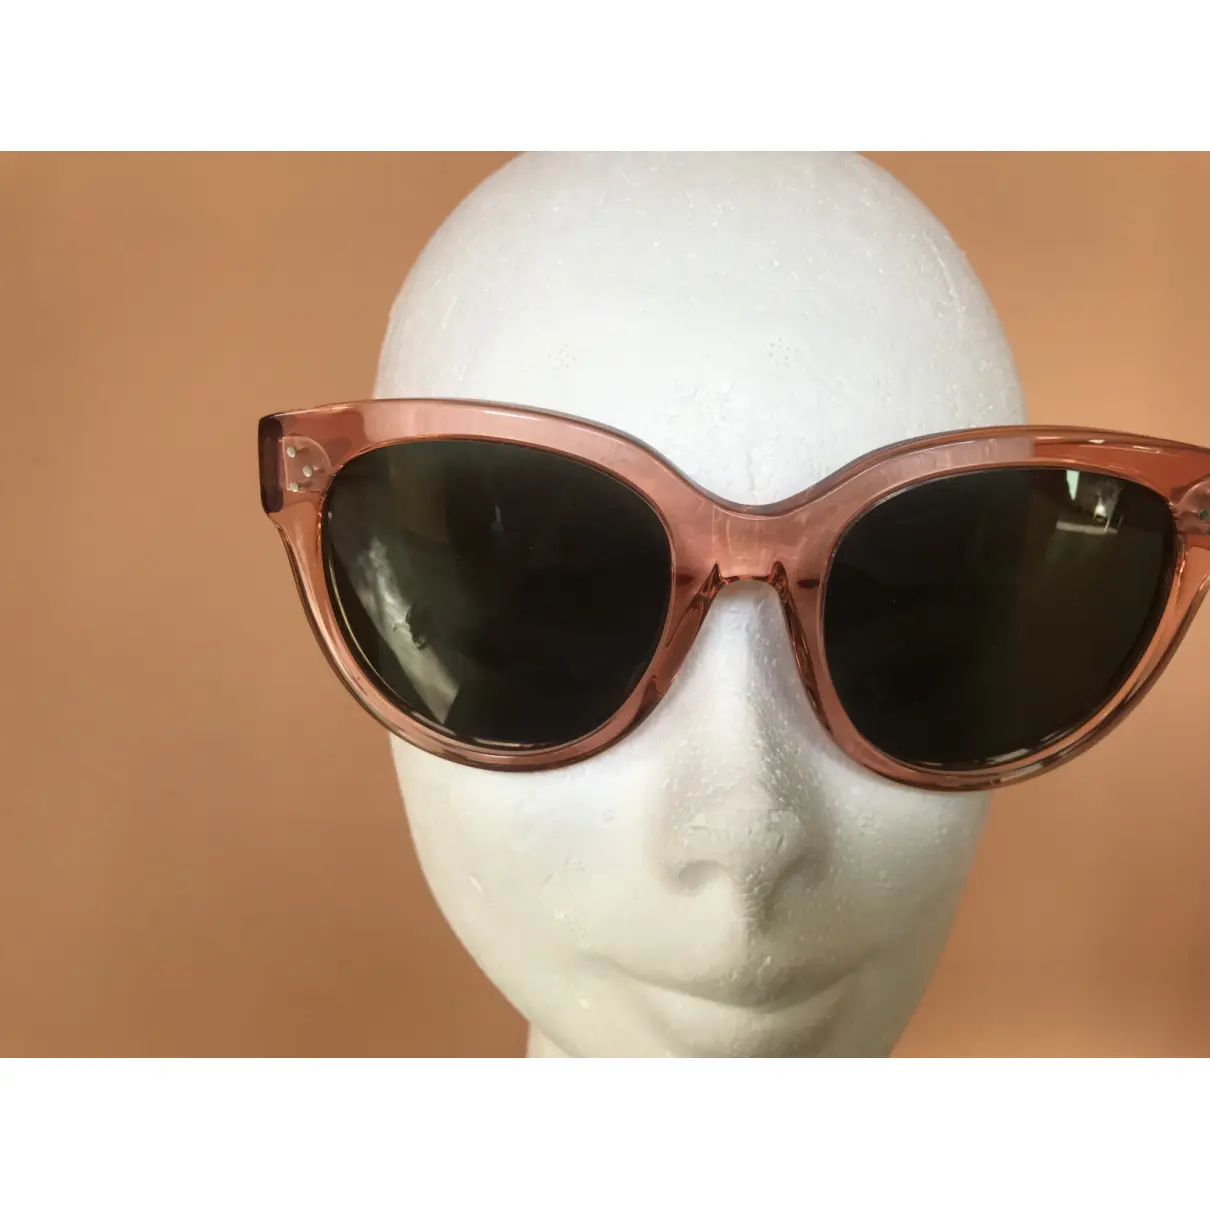 Oversized sunglasses Celine